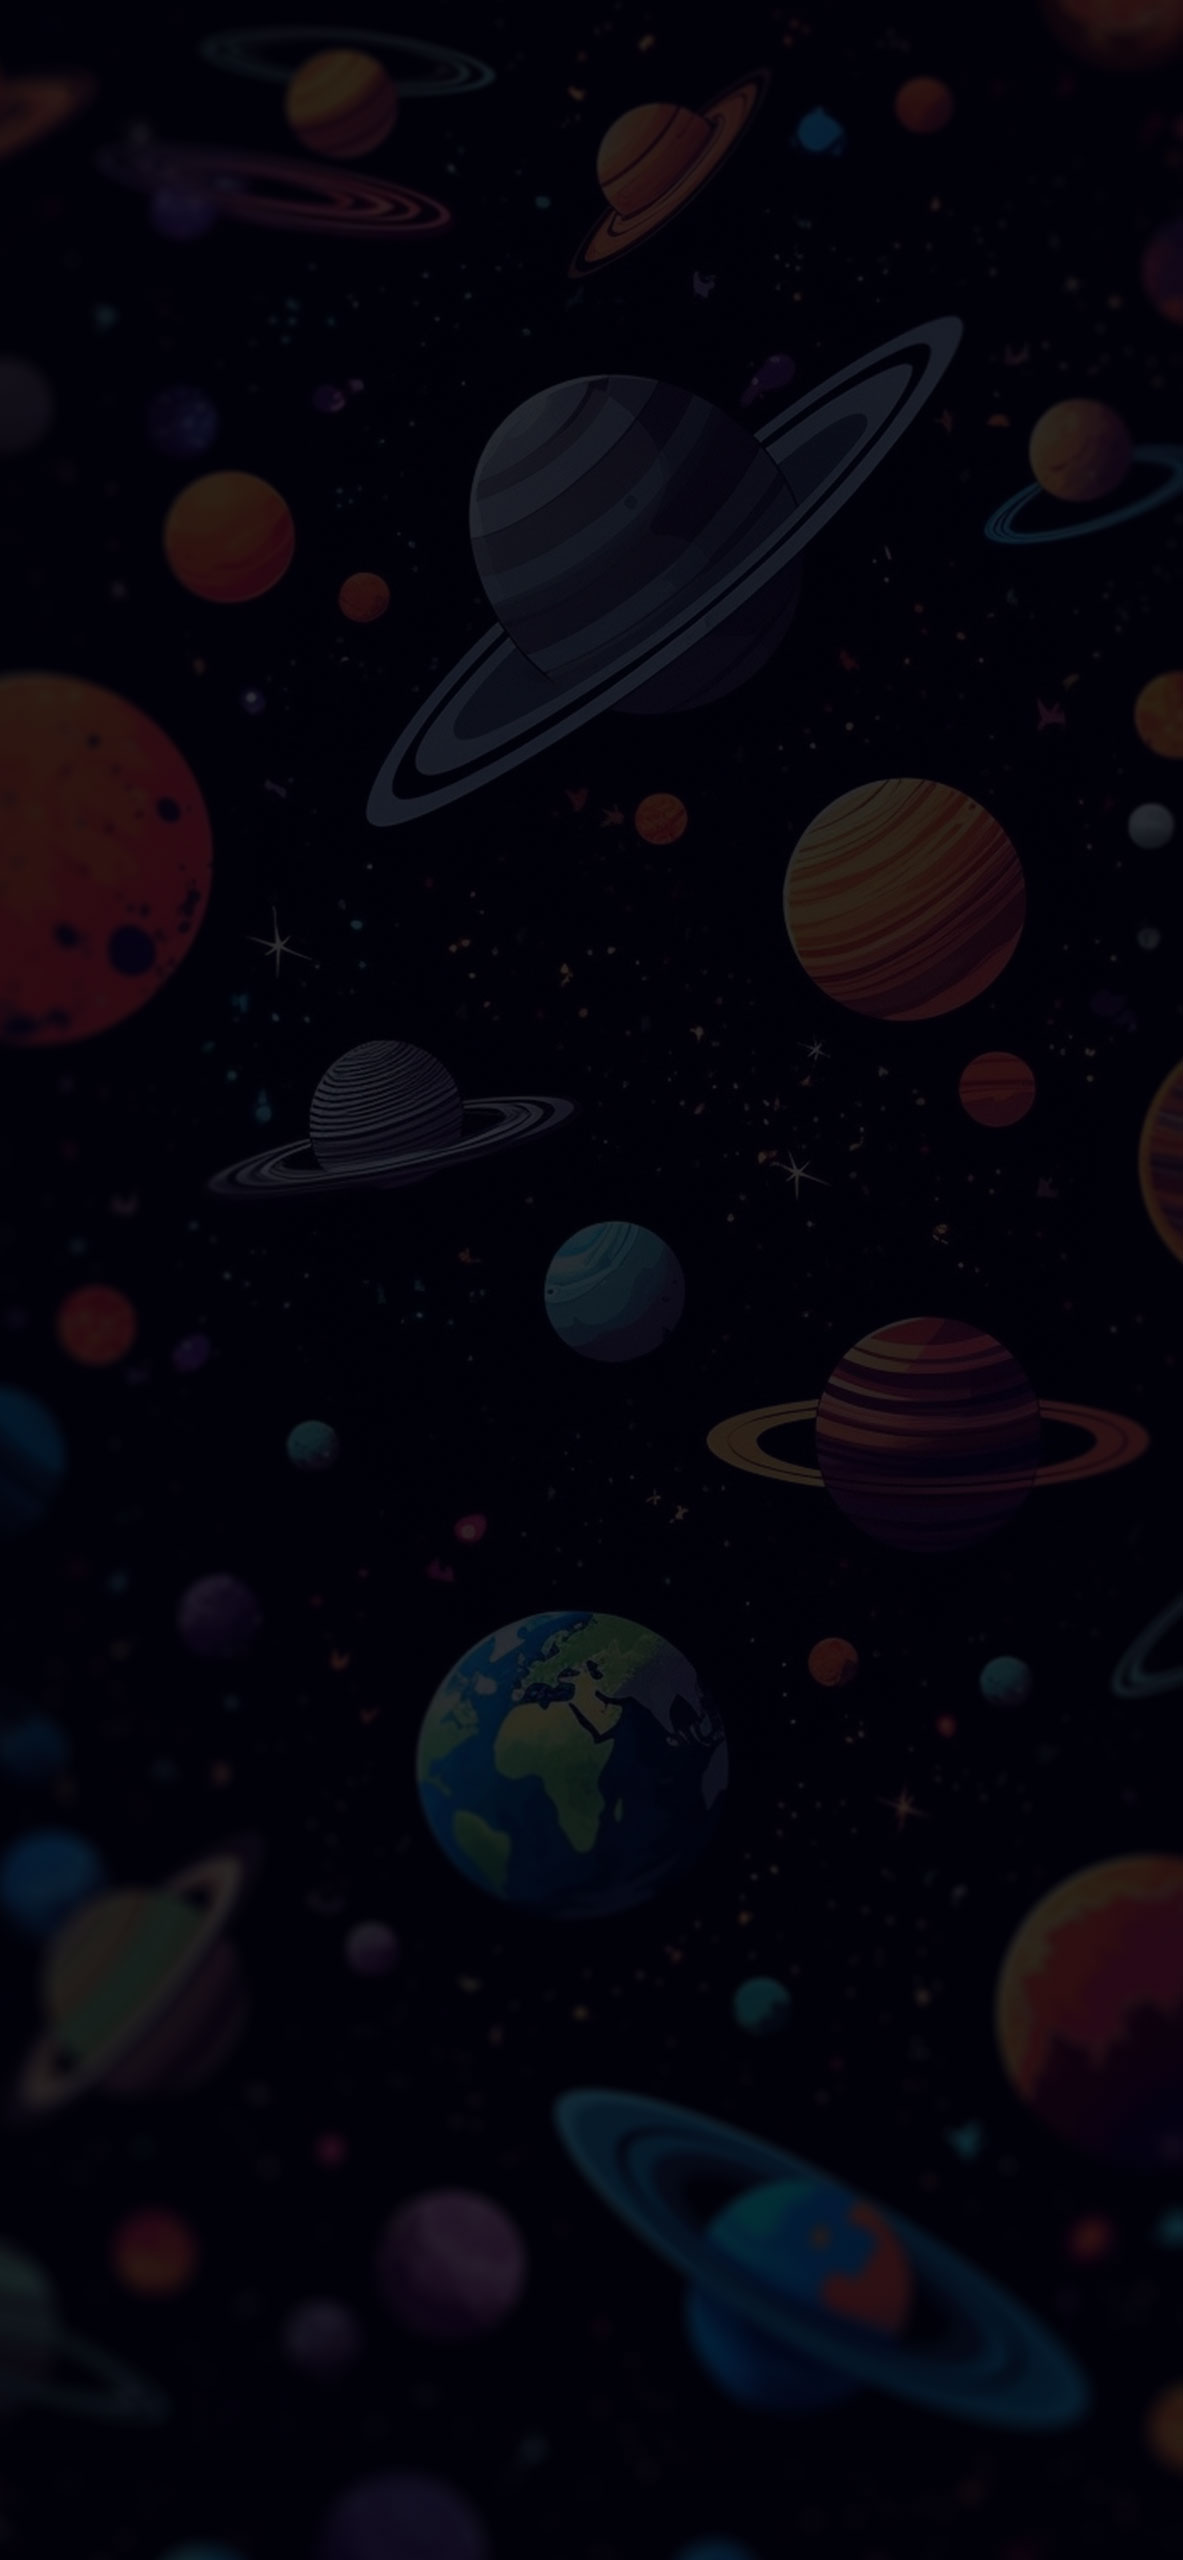 moving planets screensaver